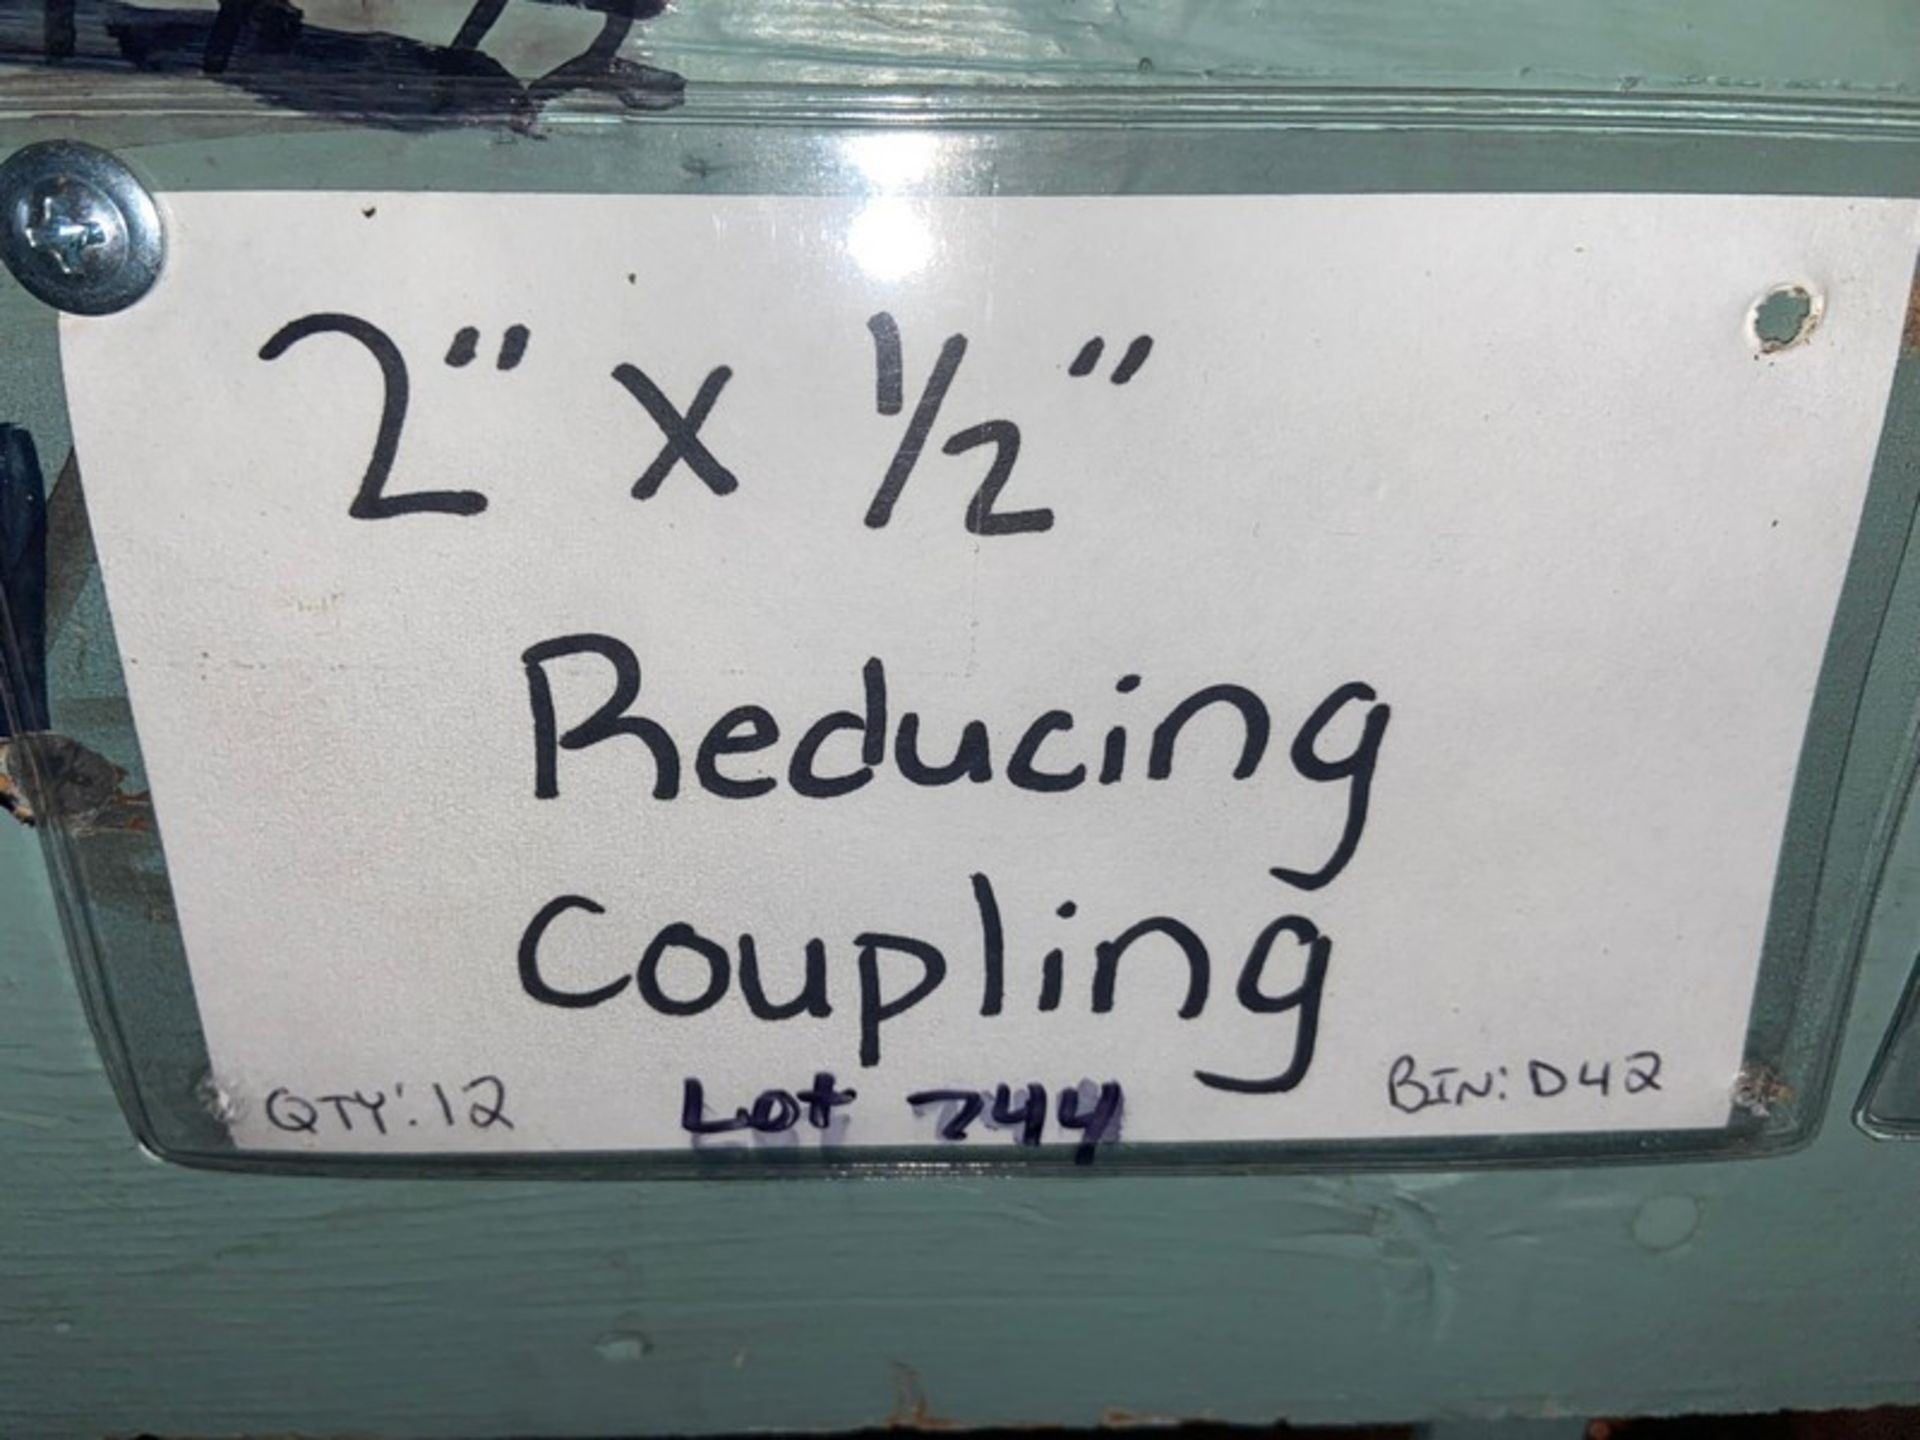 (12)2”x 1/2” Reducing Coupking (Bin:D42); (3) 2”x 3/4” Reducing Coupling (Bin:D43) (LOCATED IN - Bild 2 aus 4